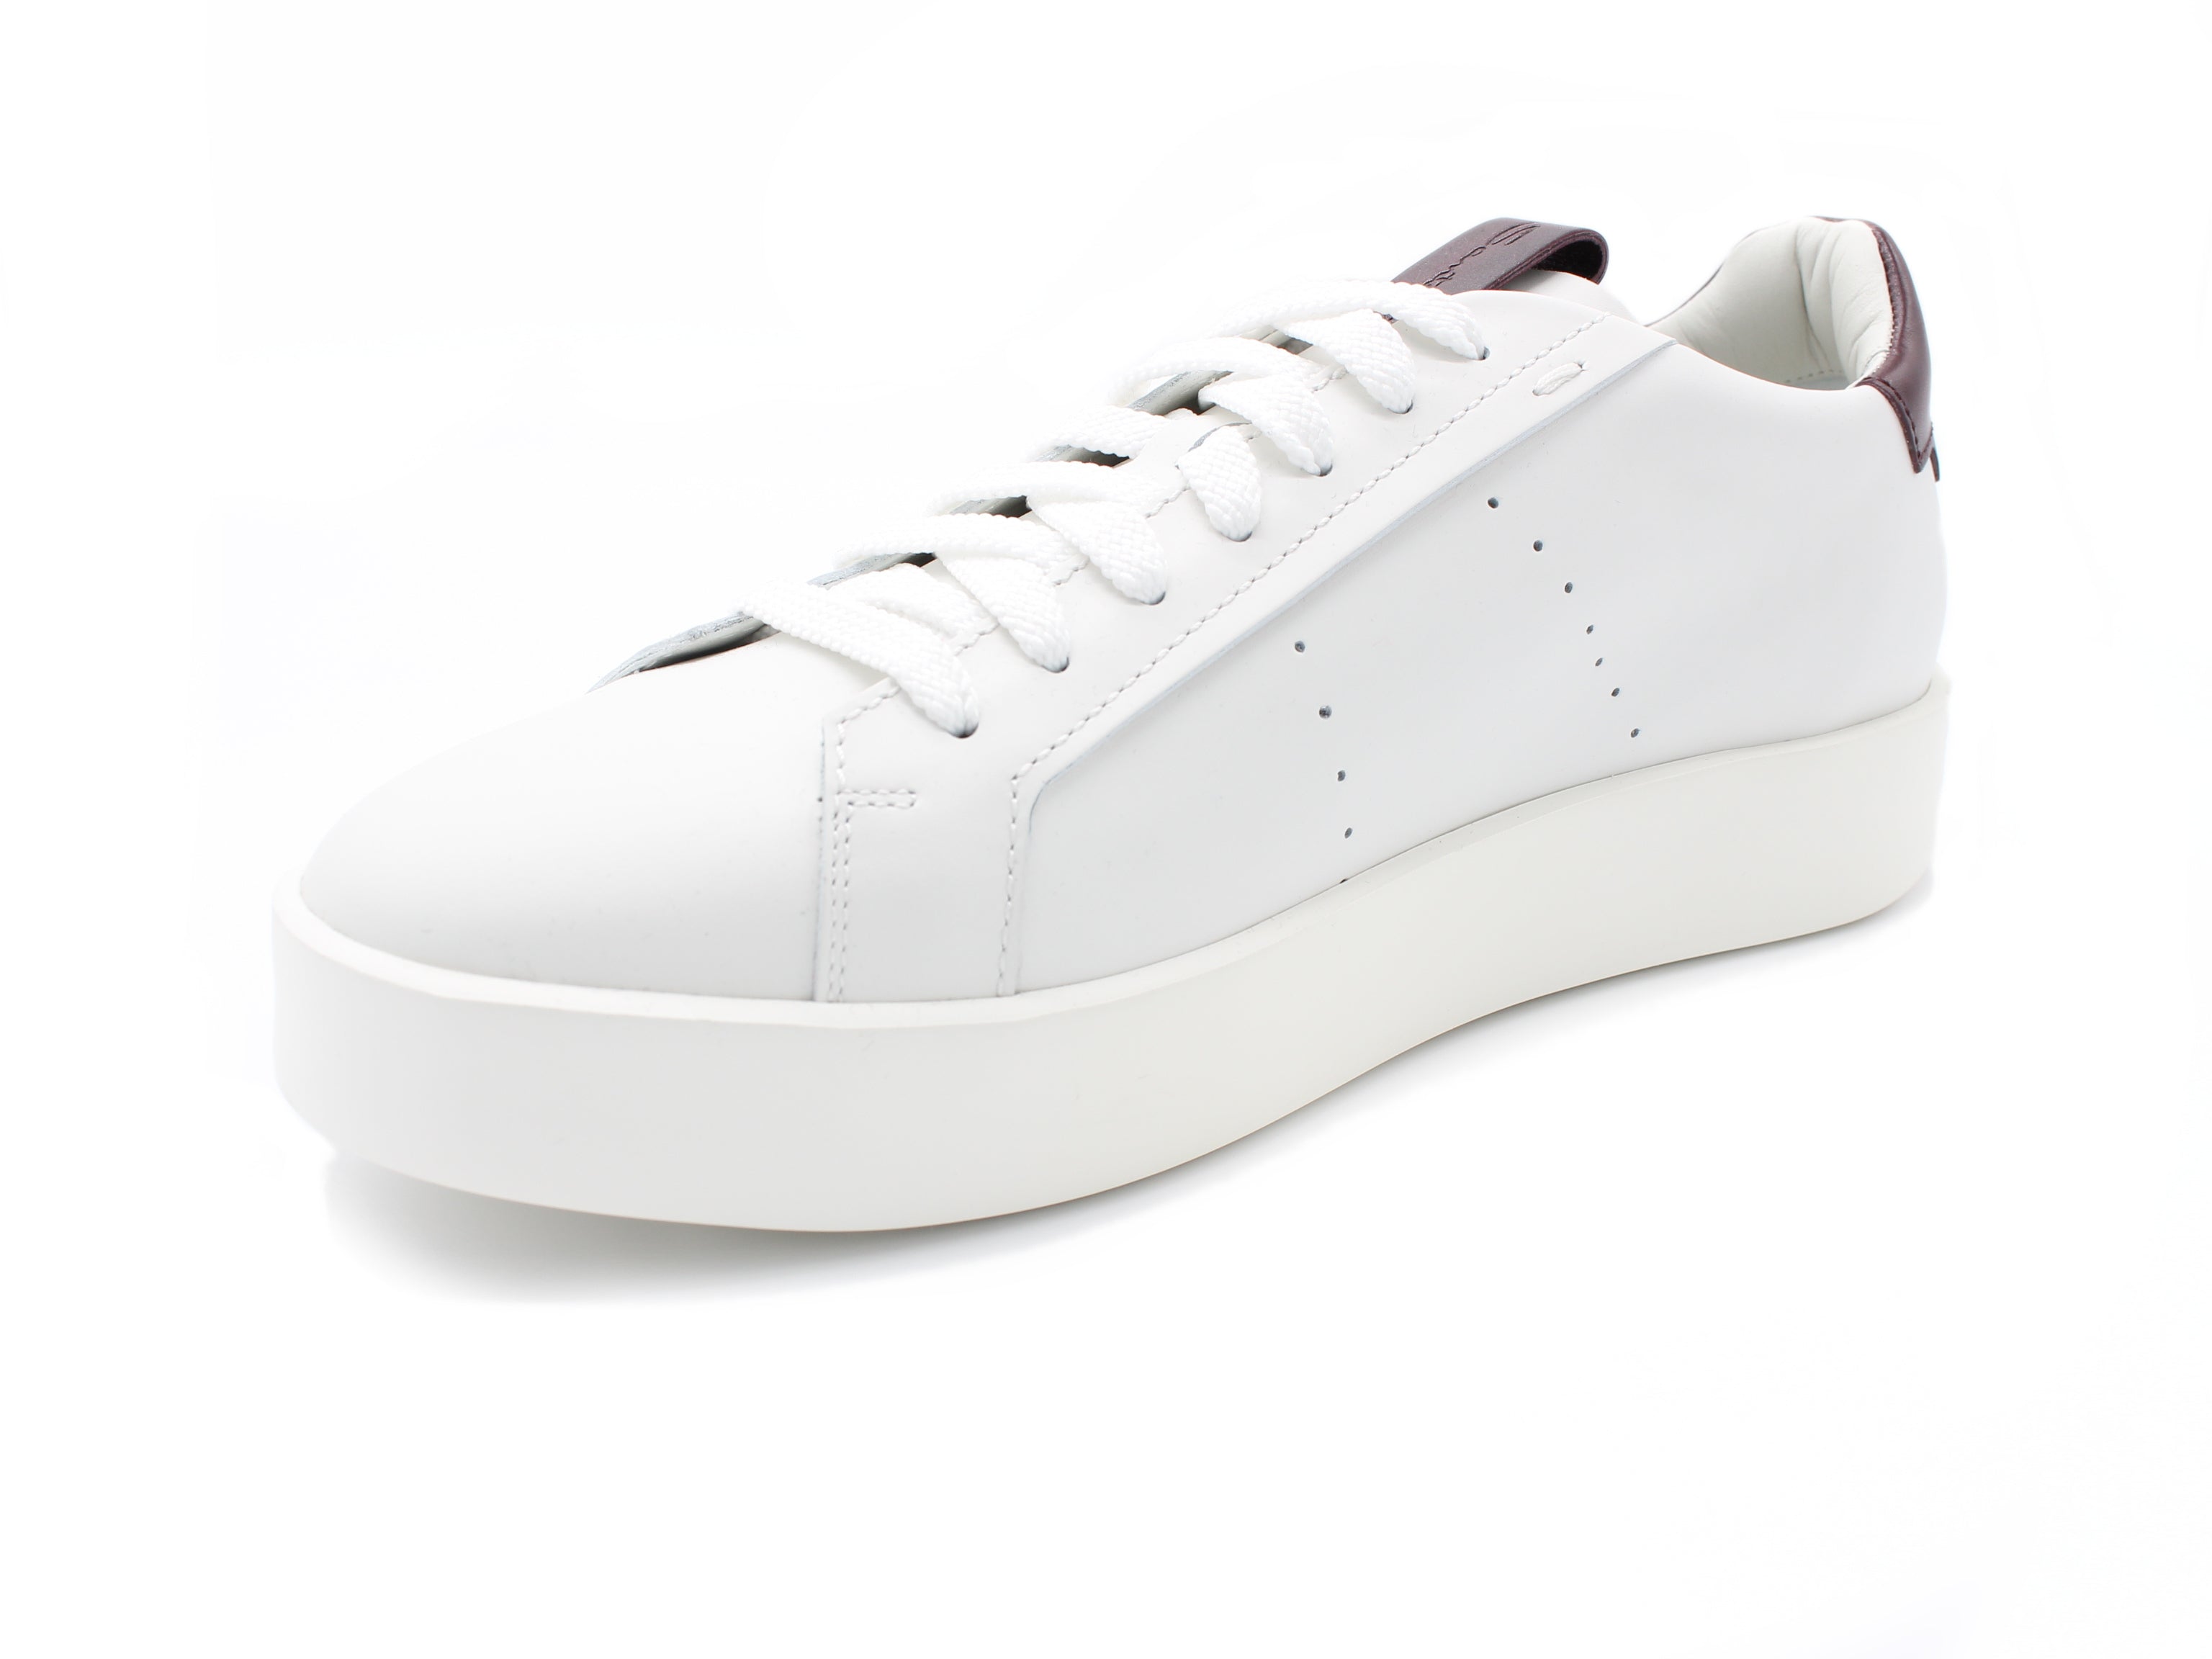 Mbwi21303barxdspi sneaker white burgundy